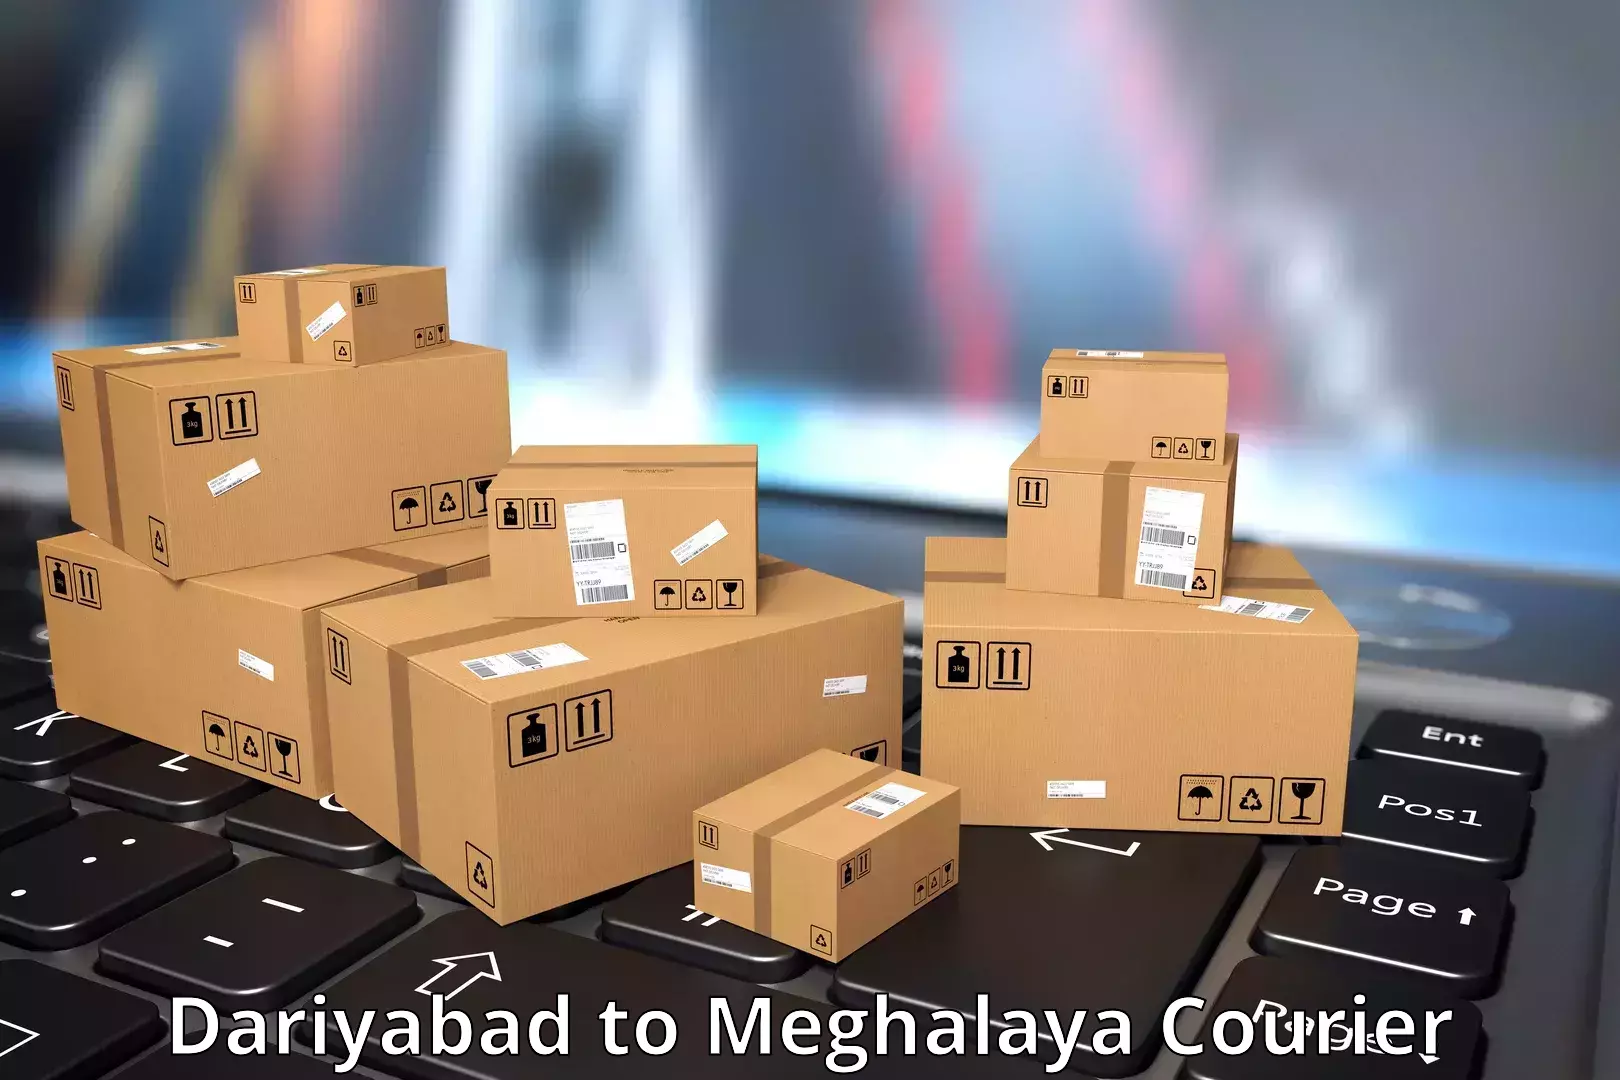 High-priority parcel service Dariyabad to Meghalaya